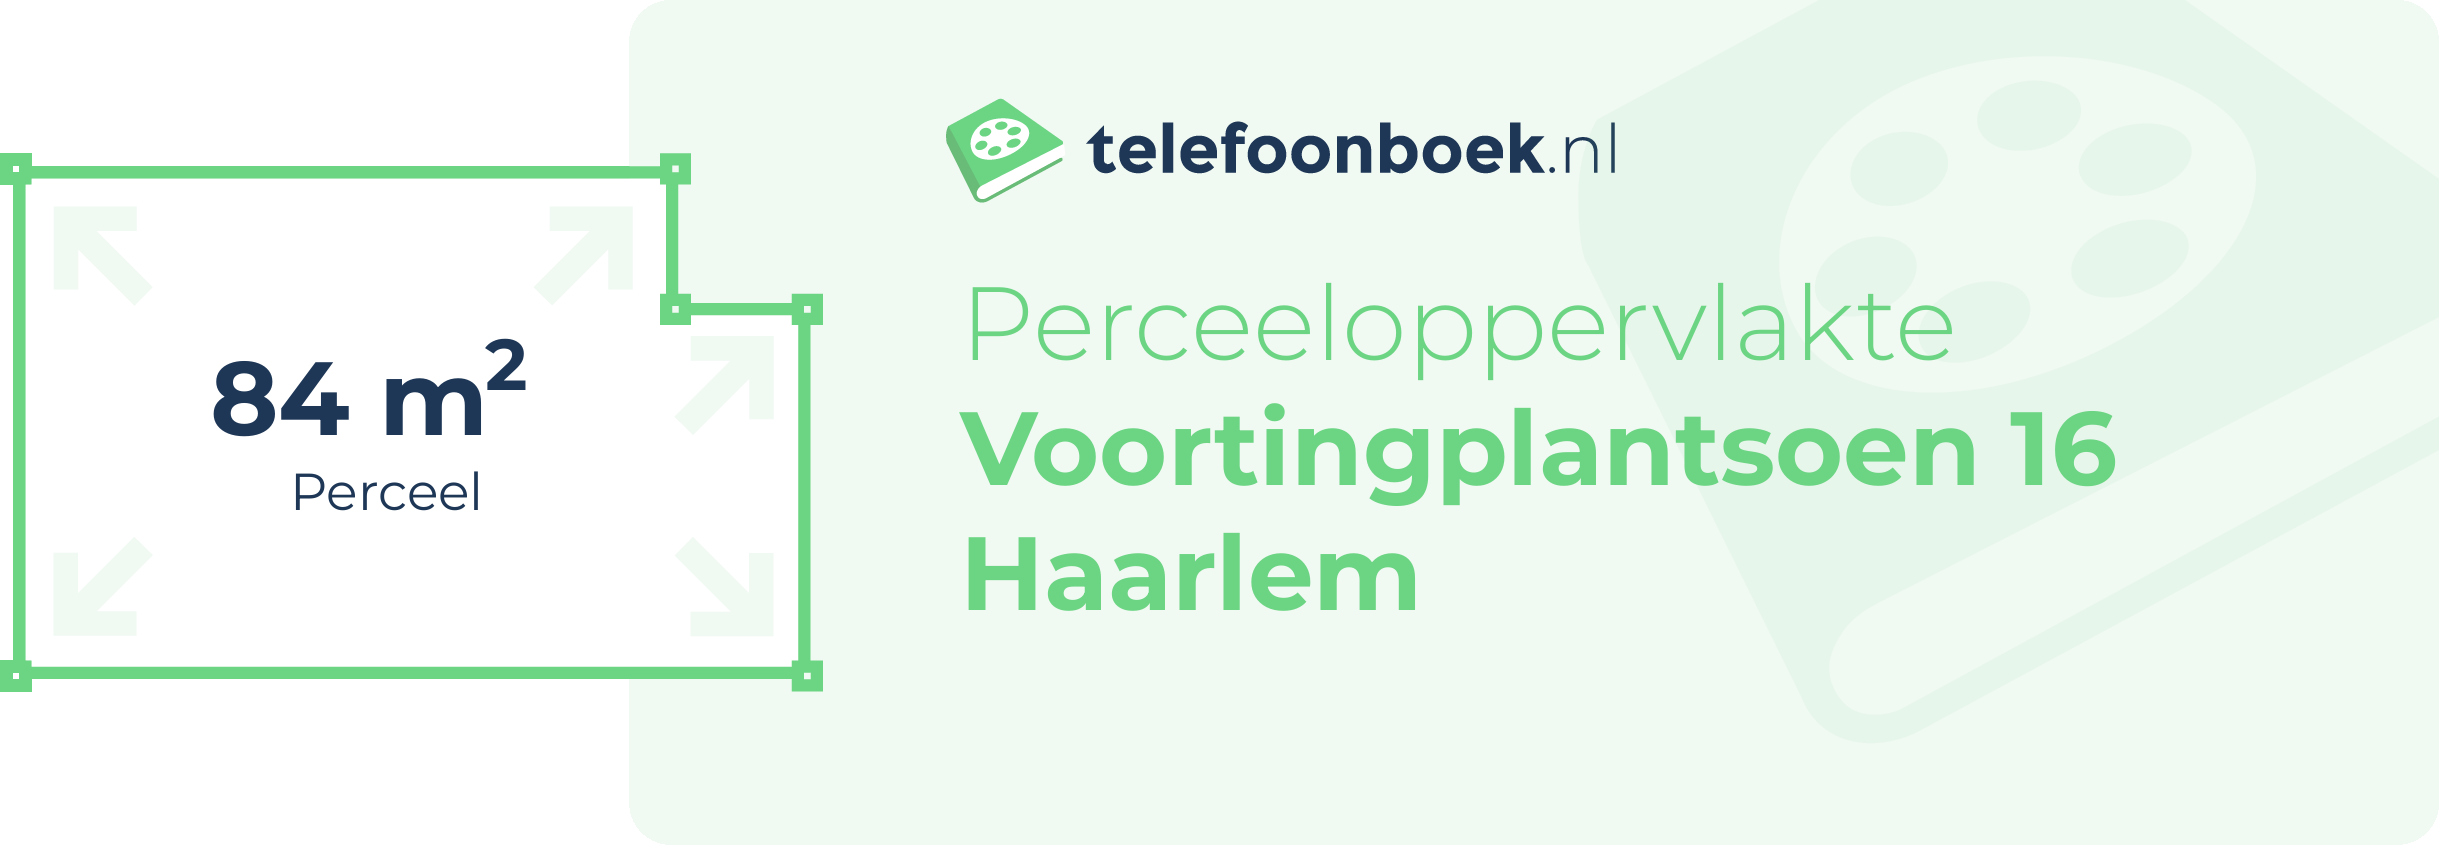 Perceeloppervlakte Voortingplantsoen 16 Haarlem